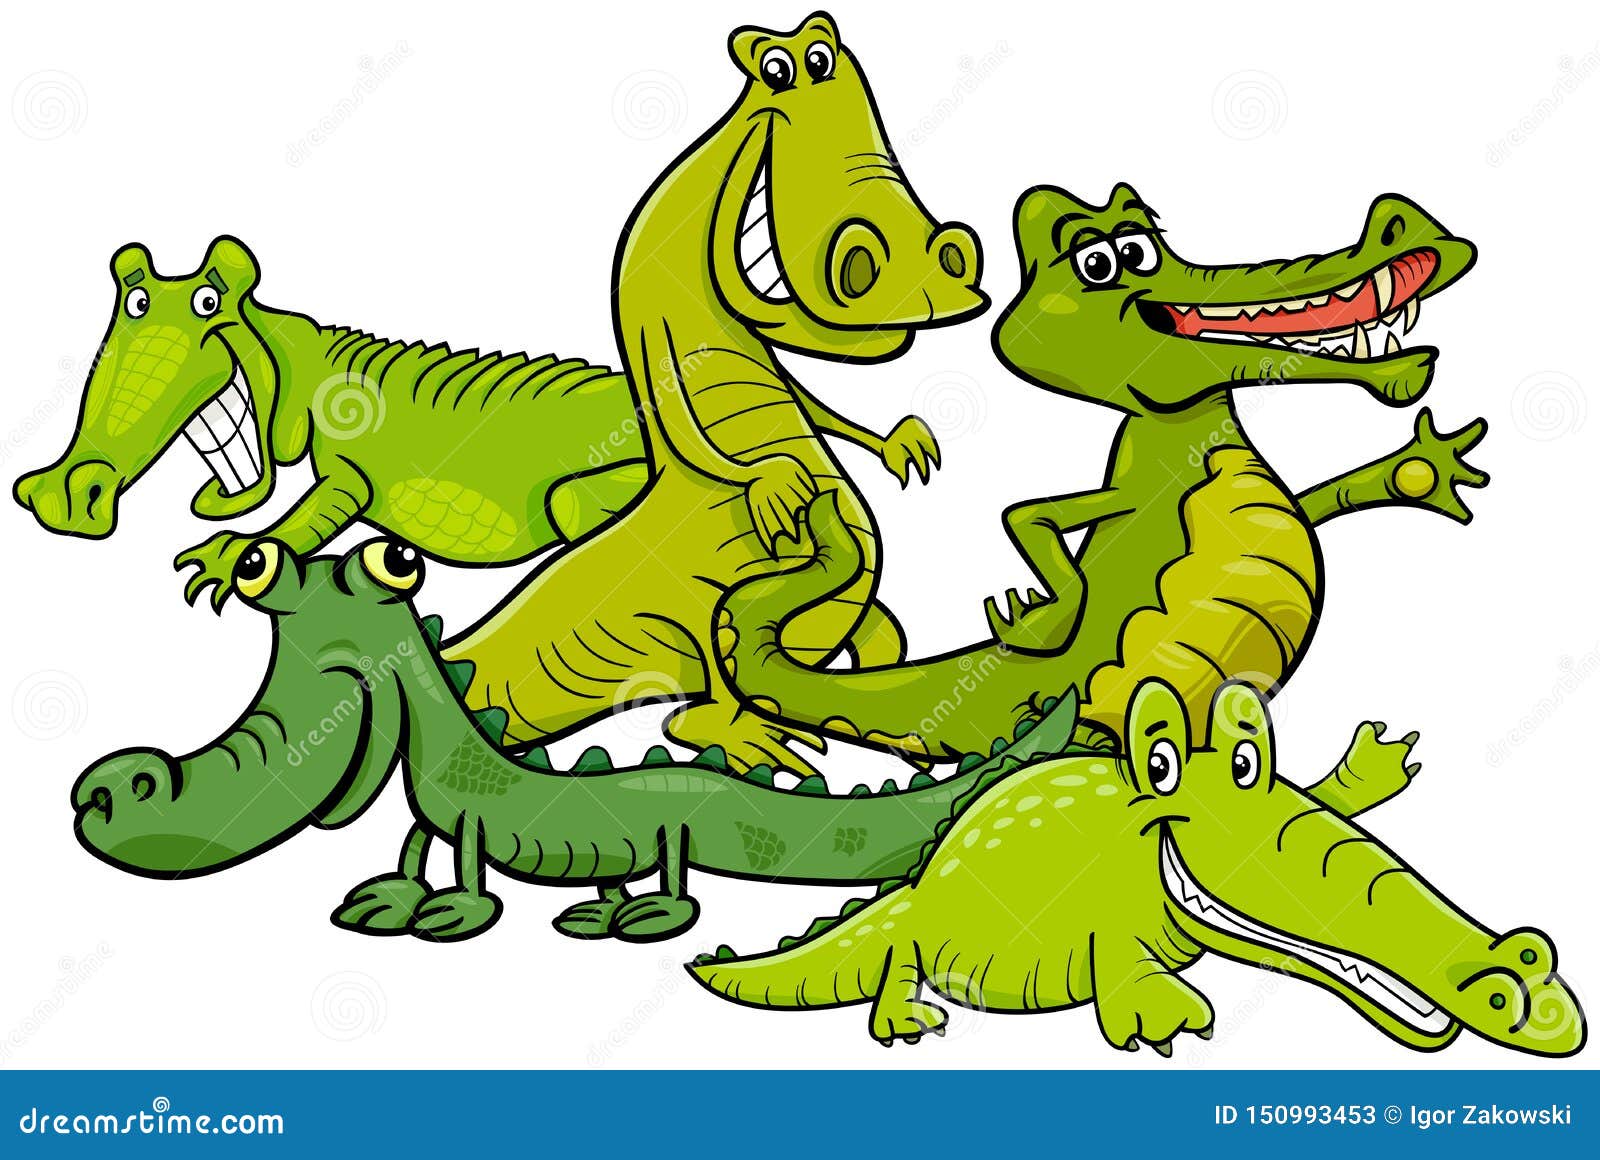 funny crocodiles cartoon animal characters